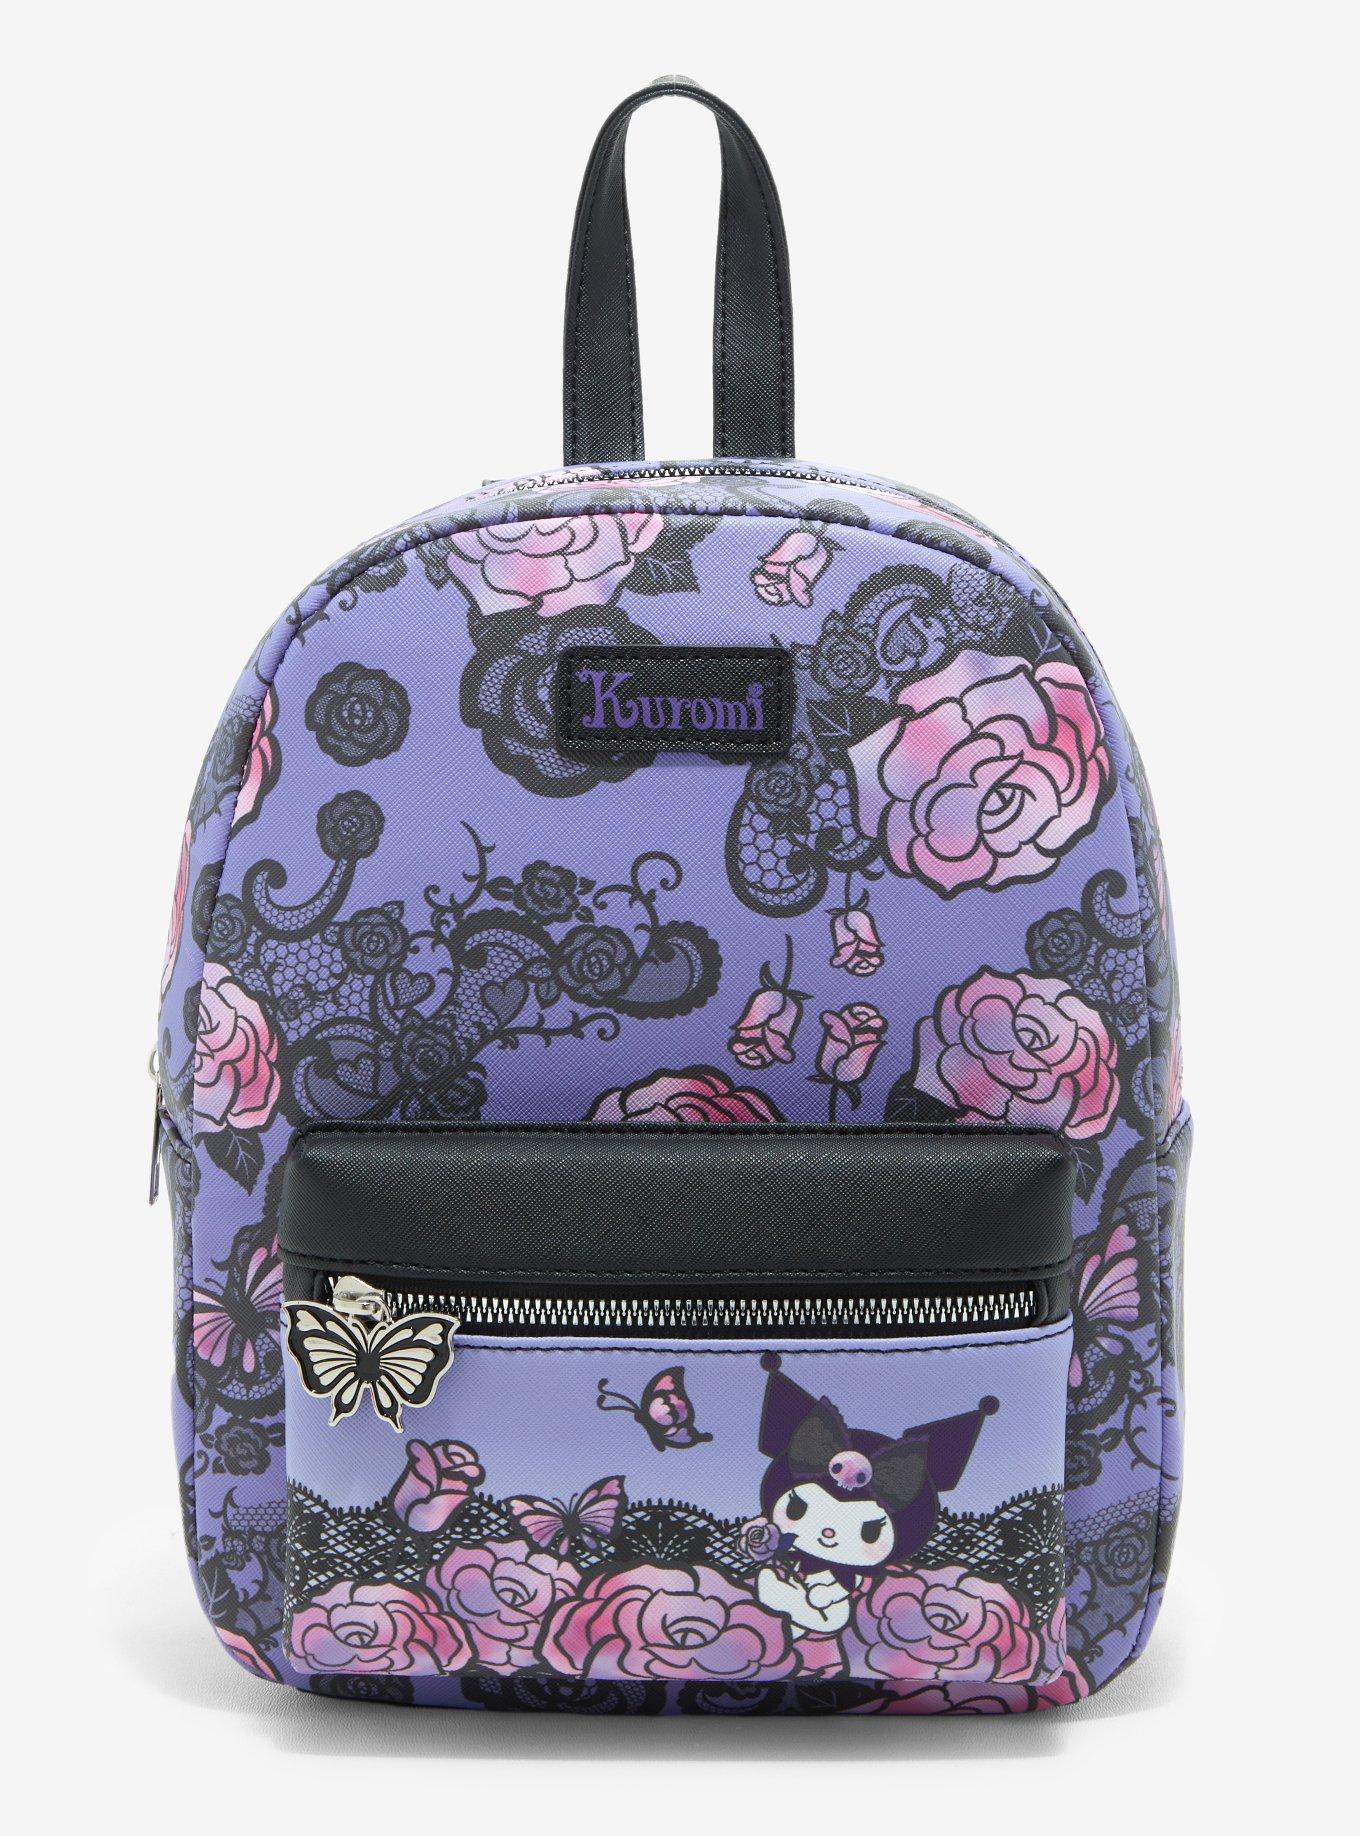 Kuromi Roses Lace Mini Backpack